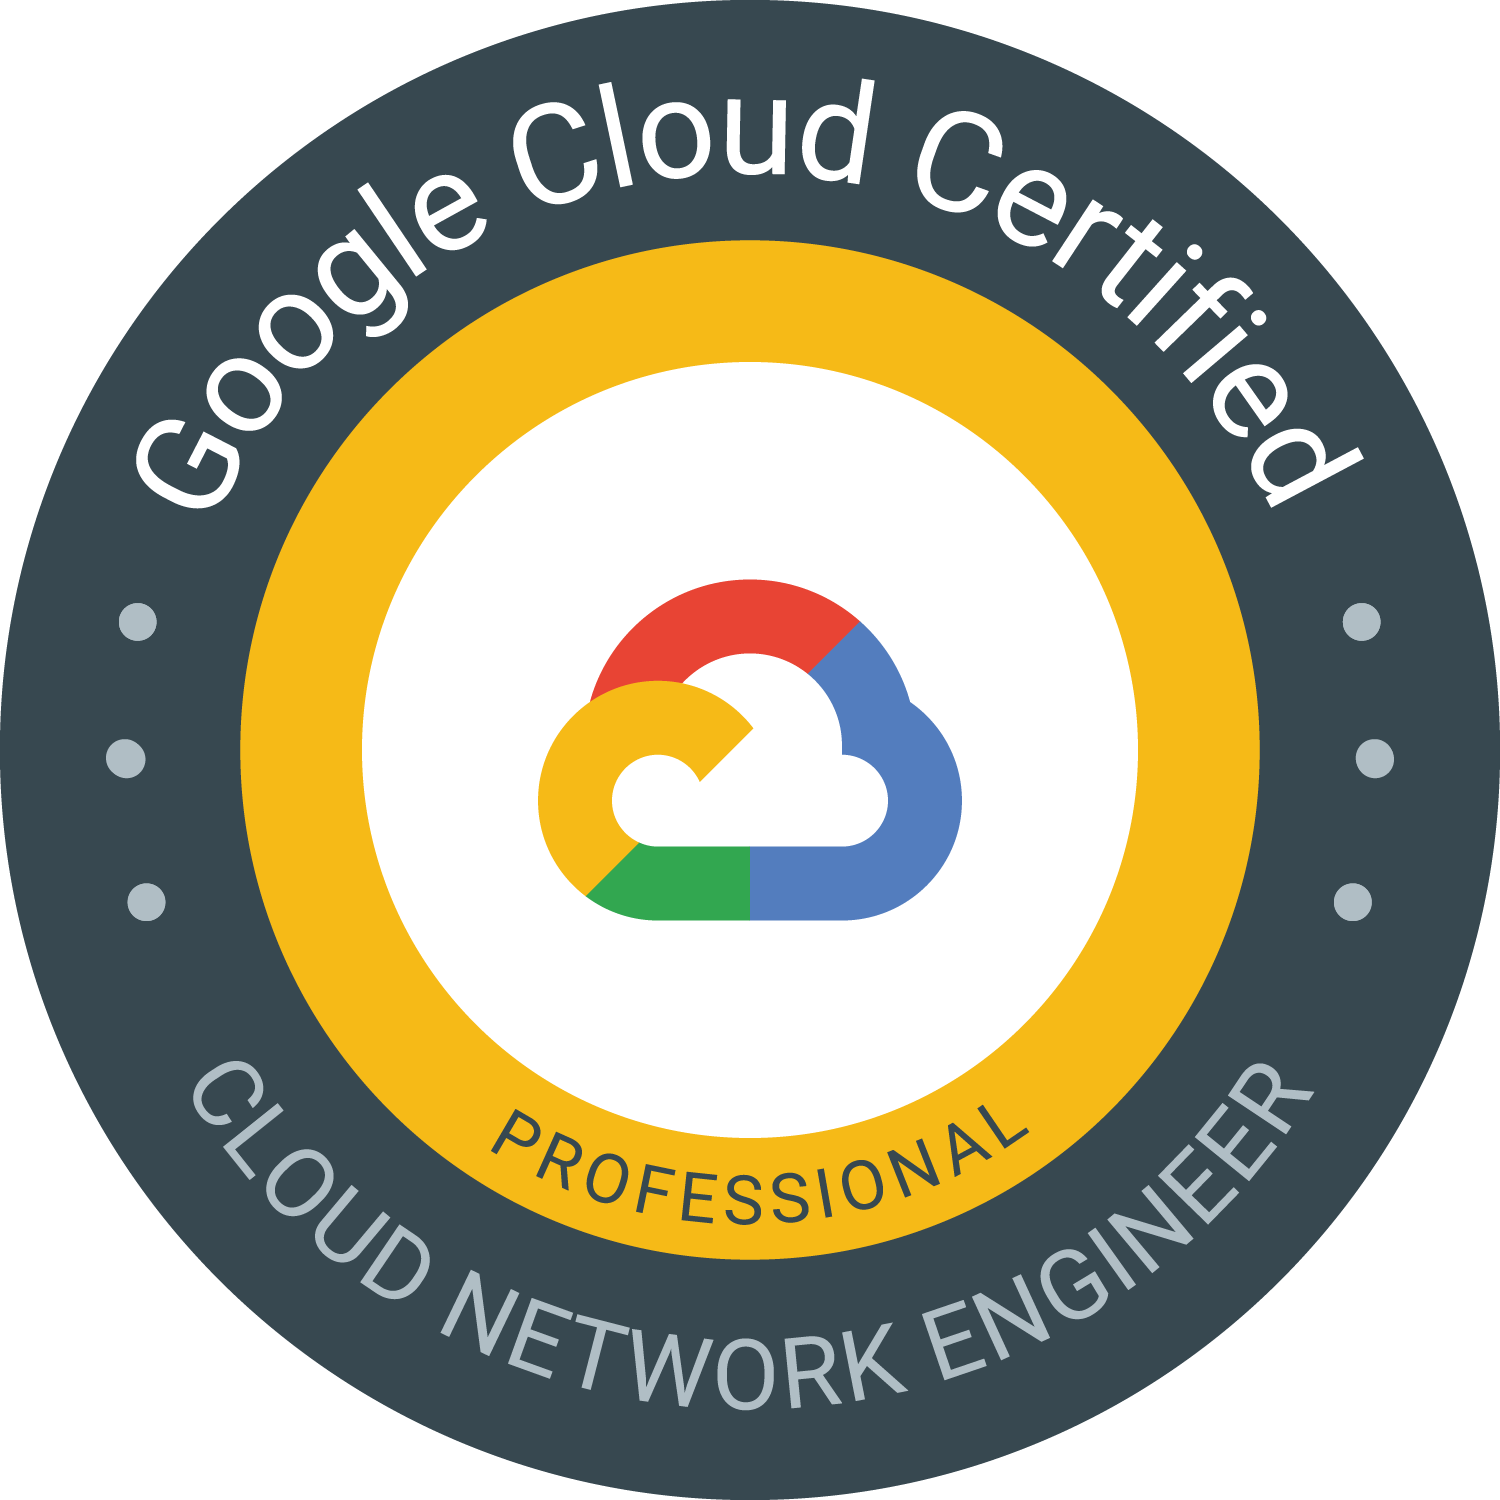 Google Cloud Certified Professional Network Engineer